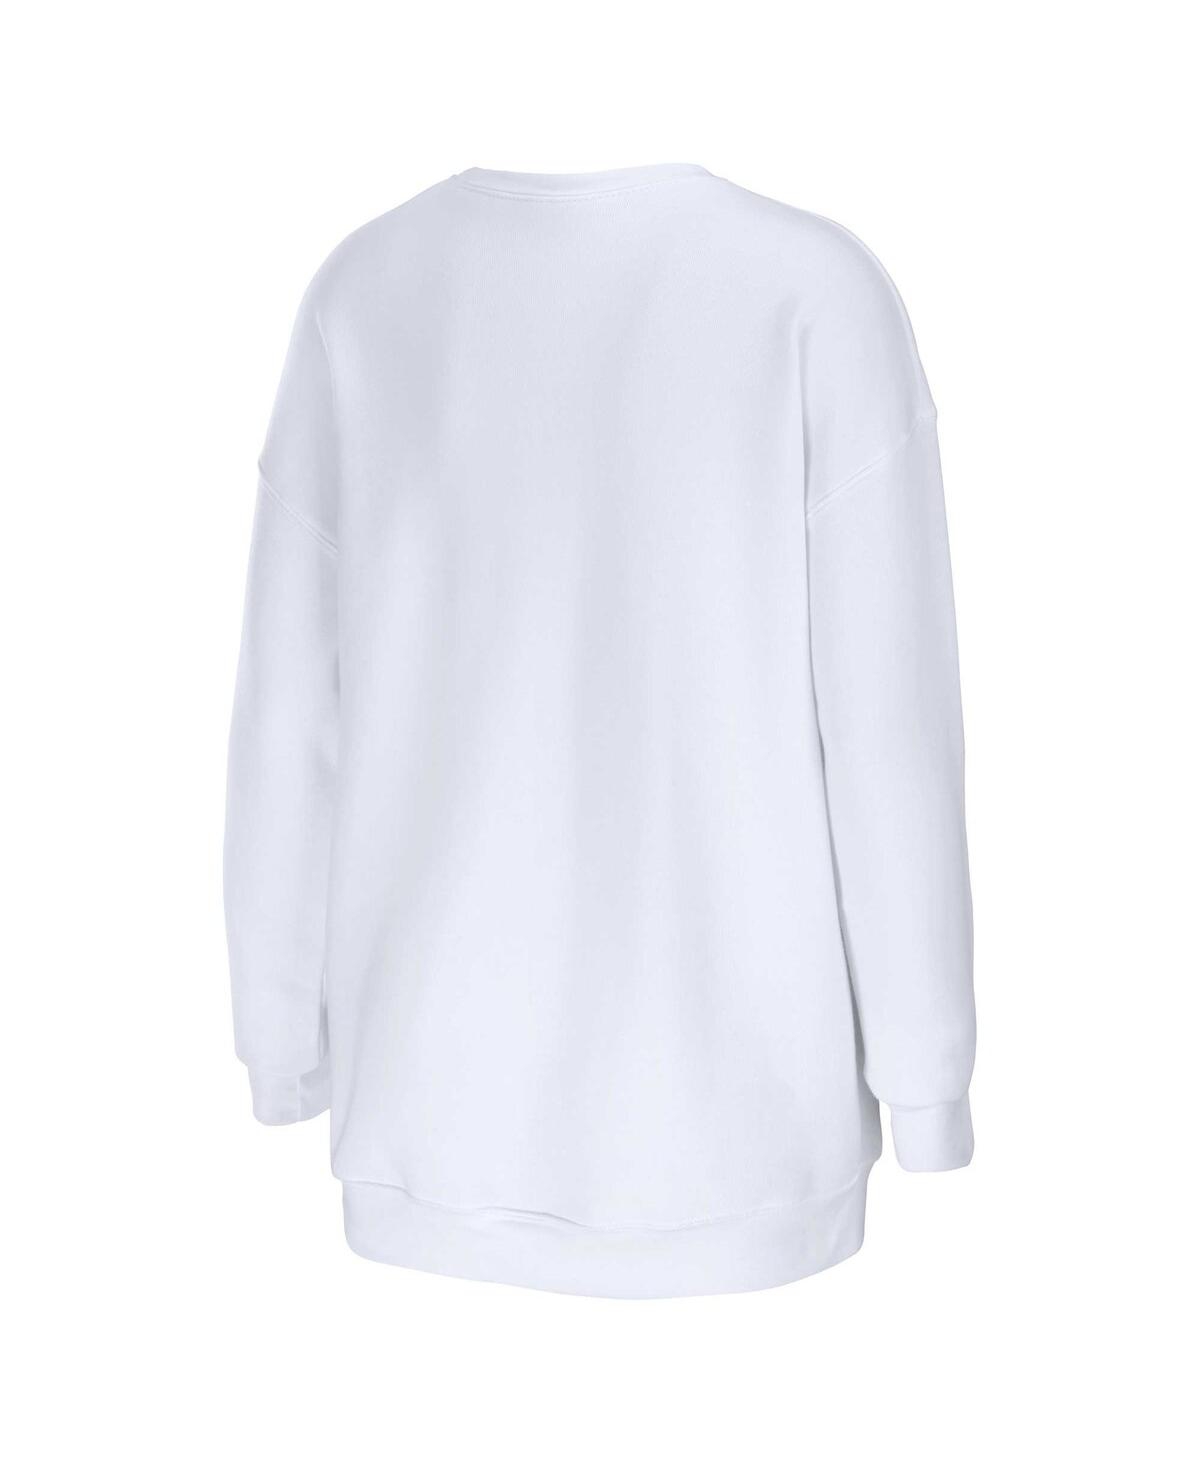 Shop Wear By Erin Andrews Women's  White Las Vegas Raiders Domestic Pullover Sweatshirt